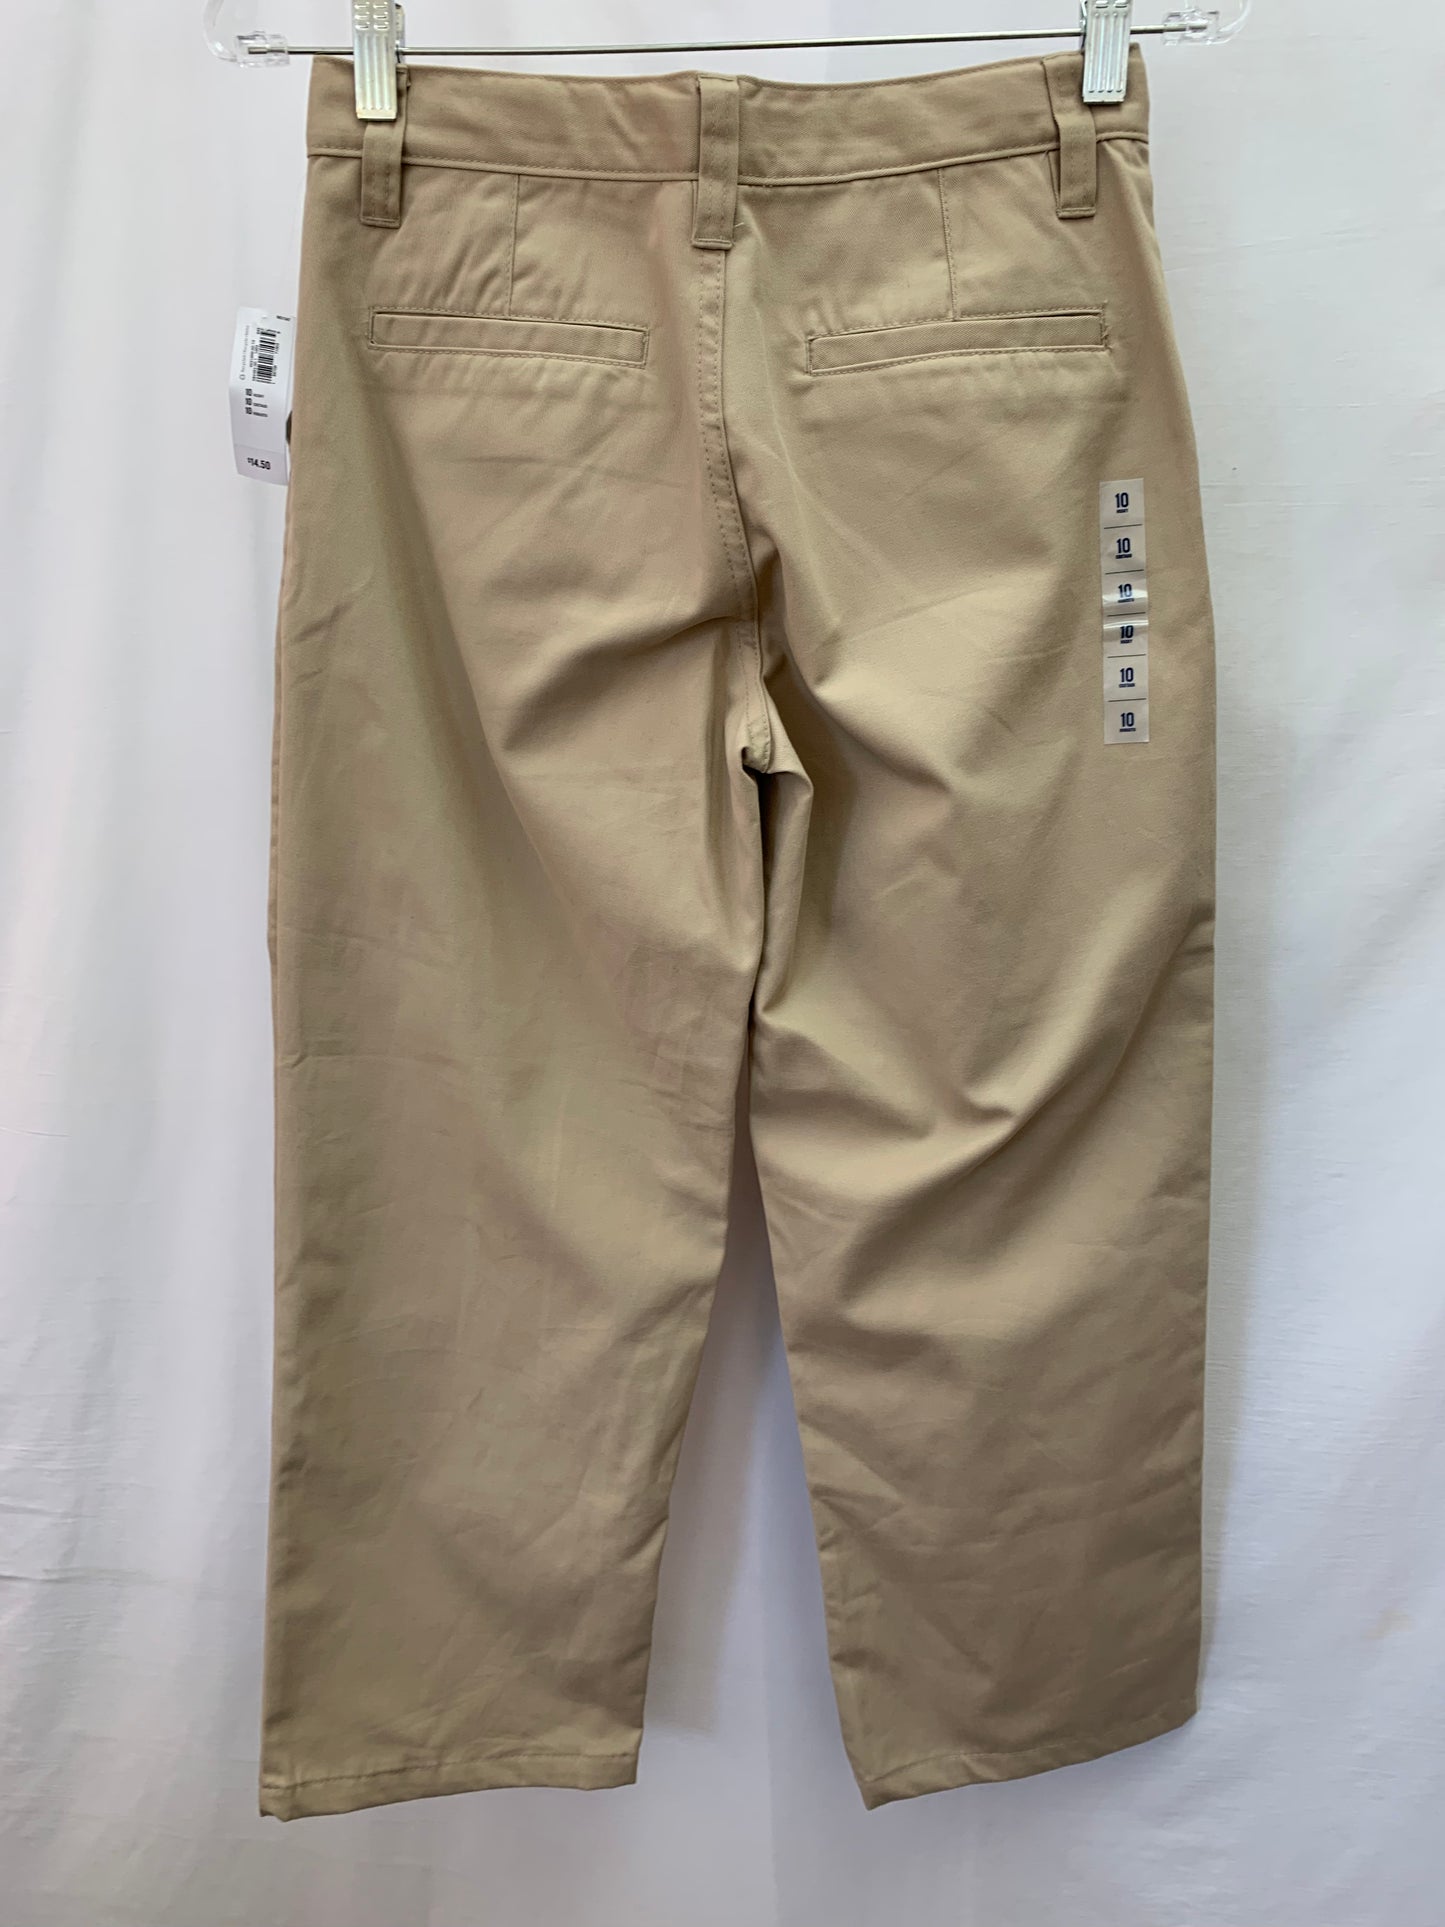 NWT - OLD NAVY khaki adjustable waist Pants - 10 Husky